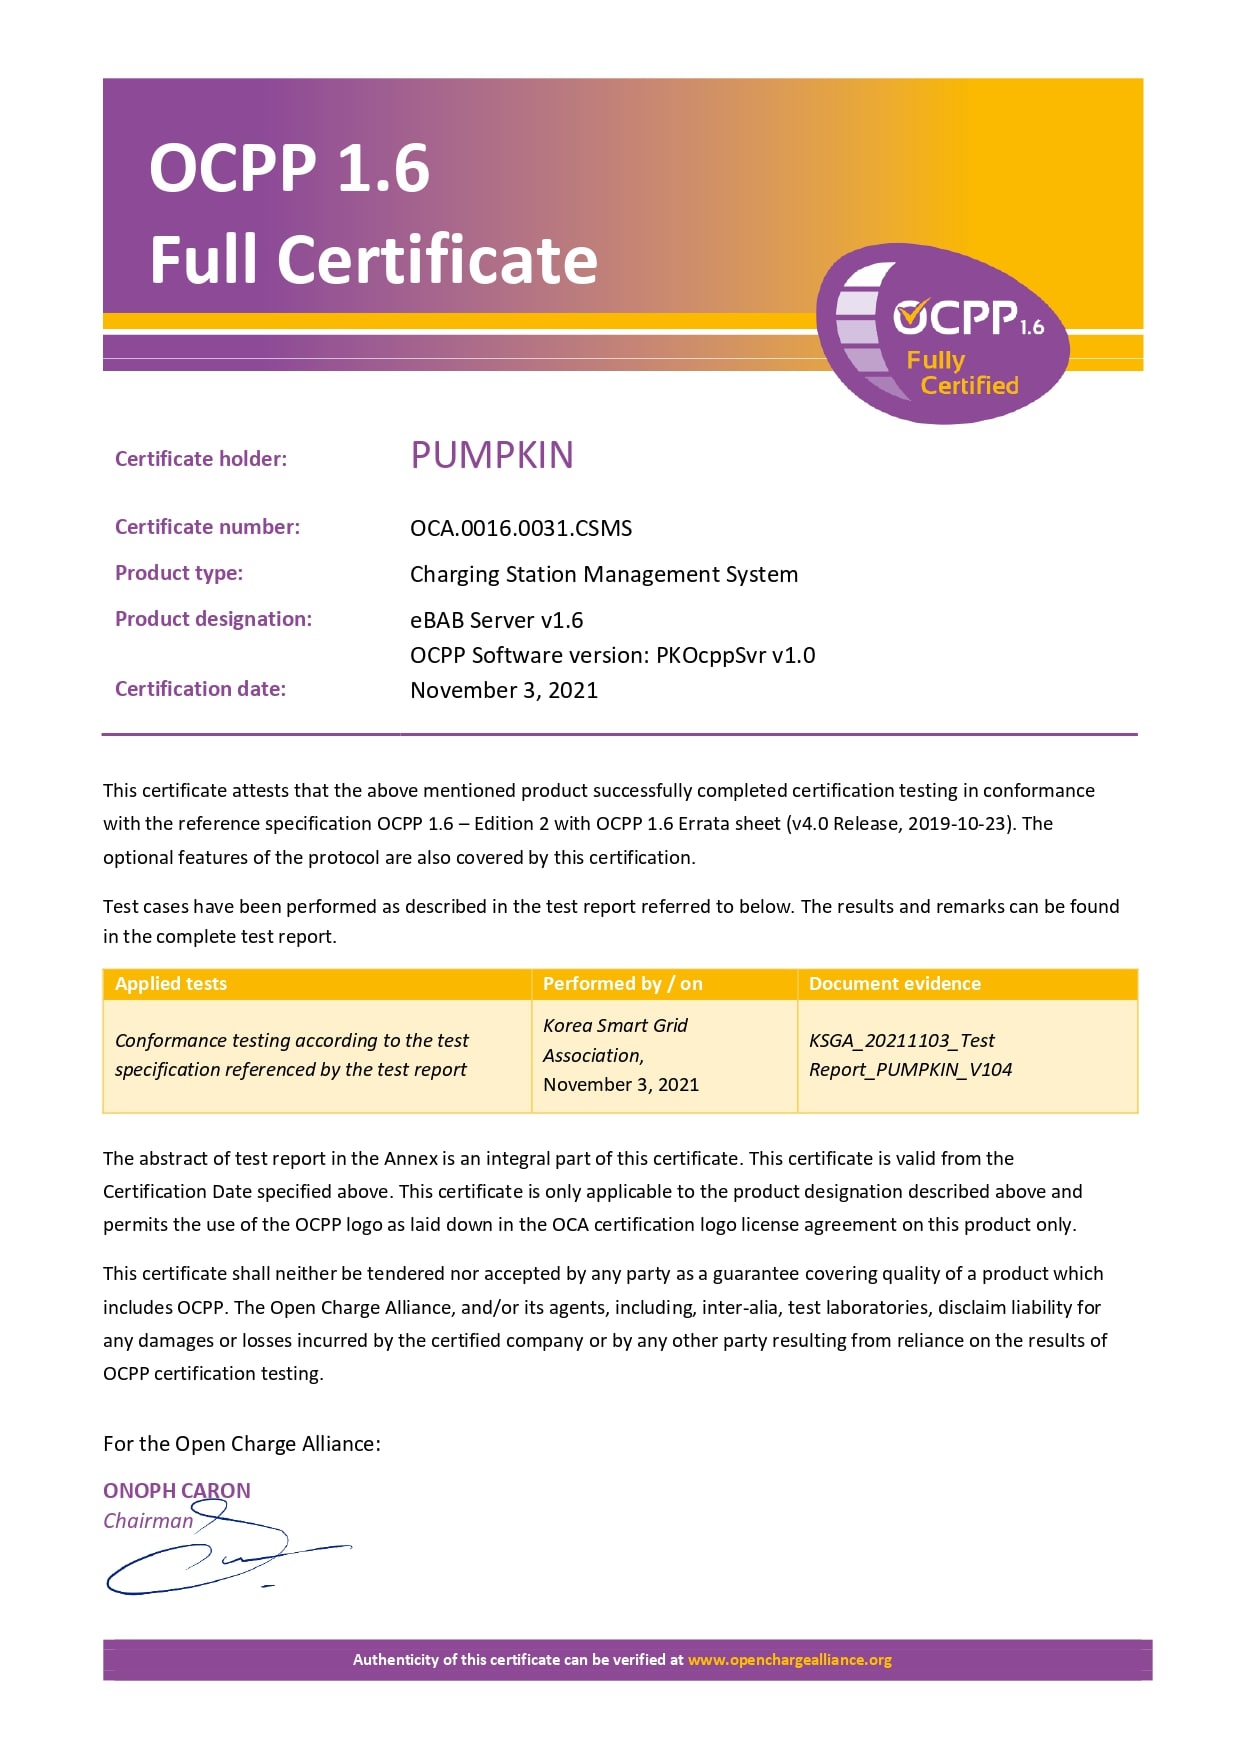 OCPP 1.6 Full Certificate